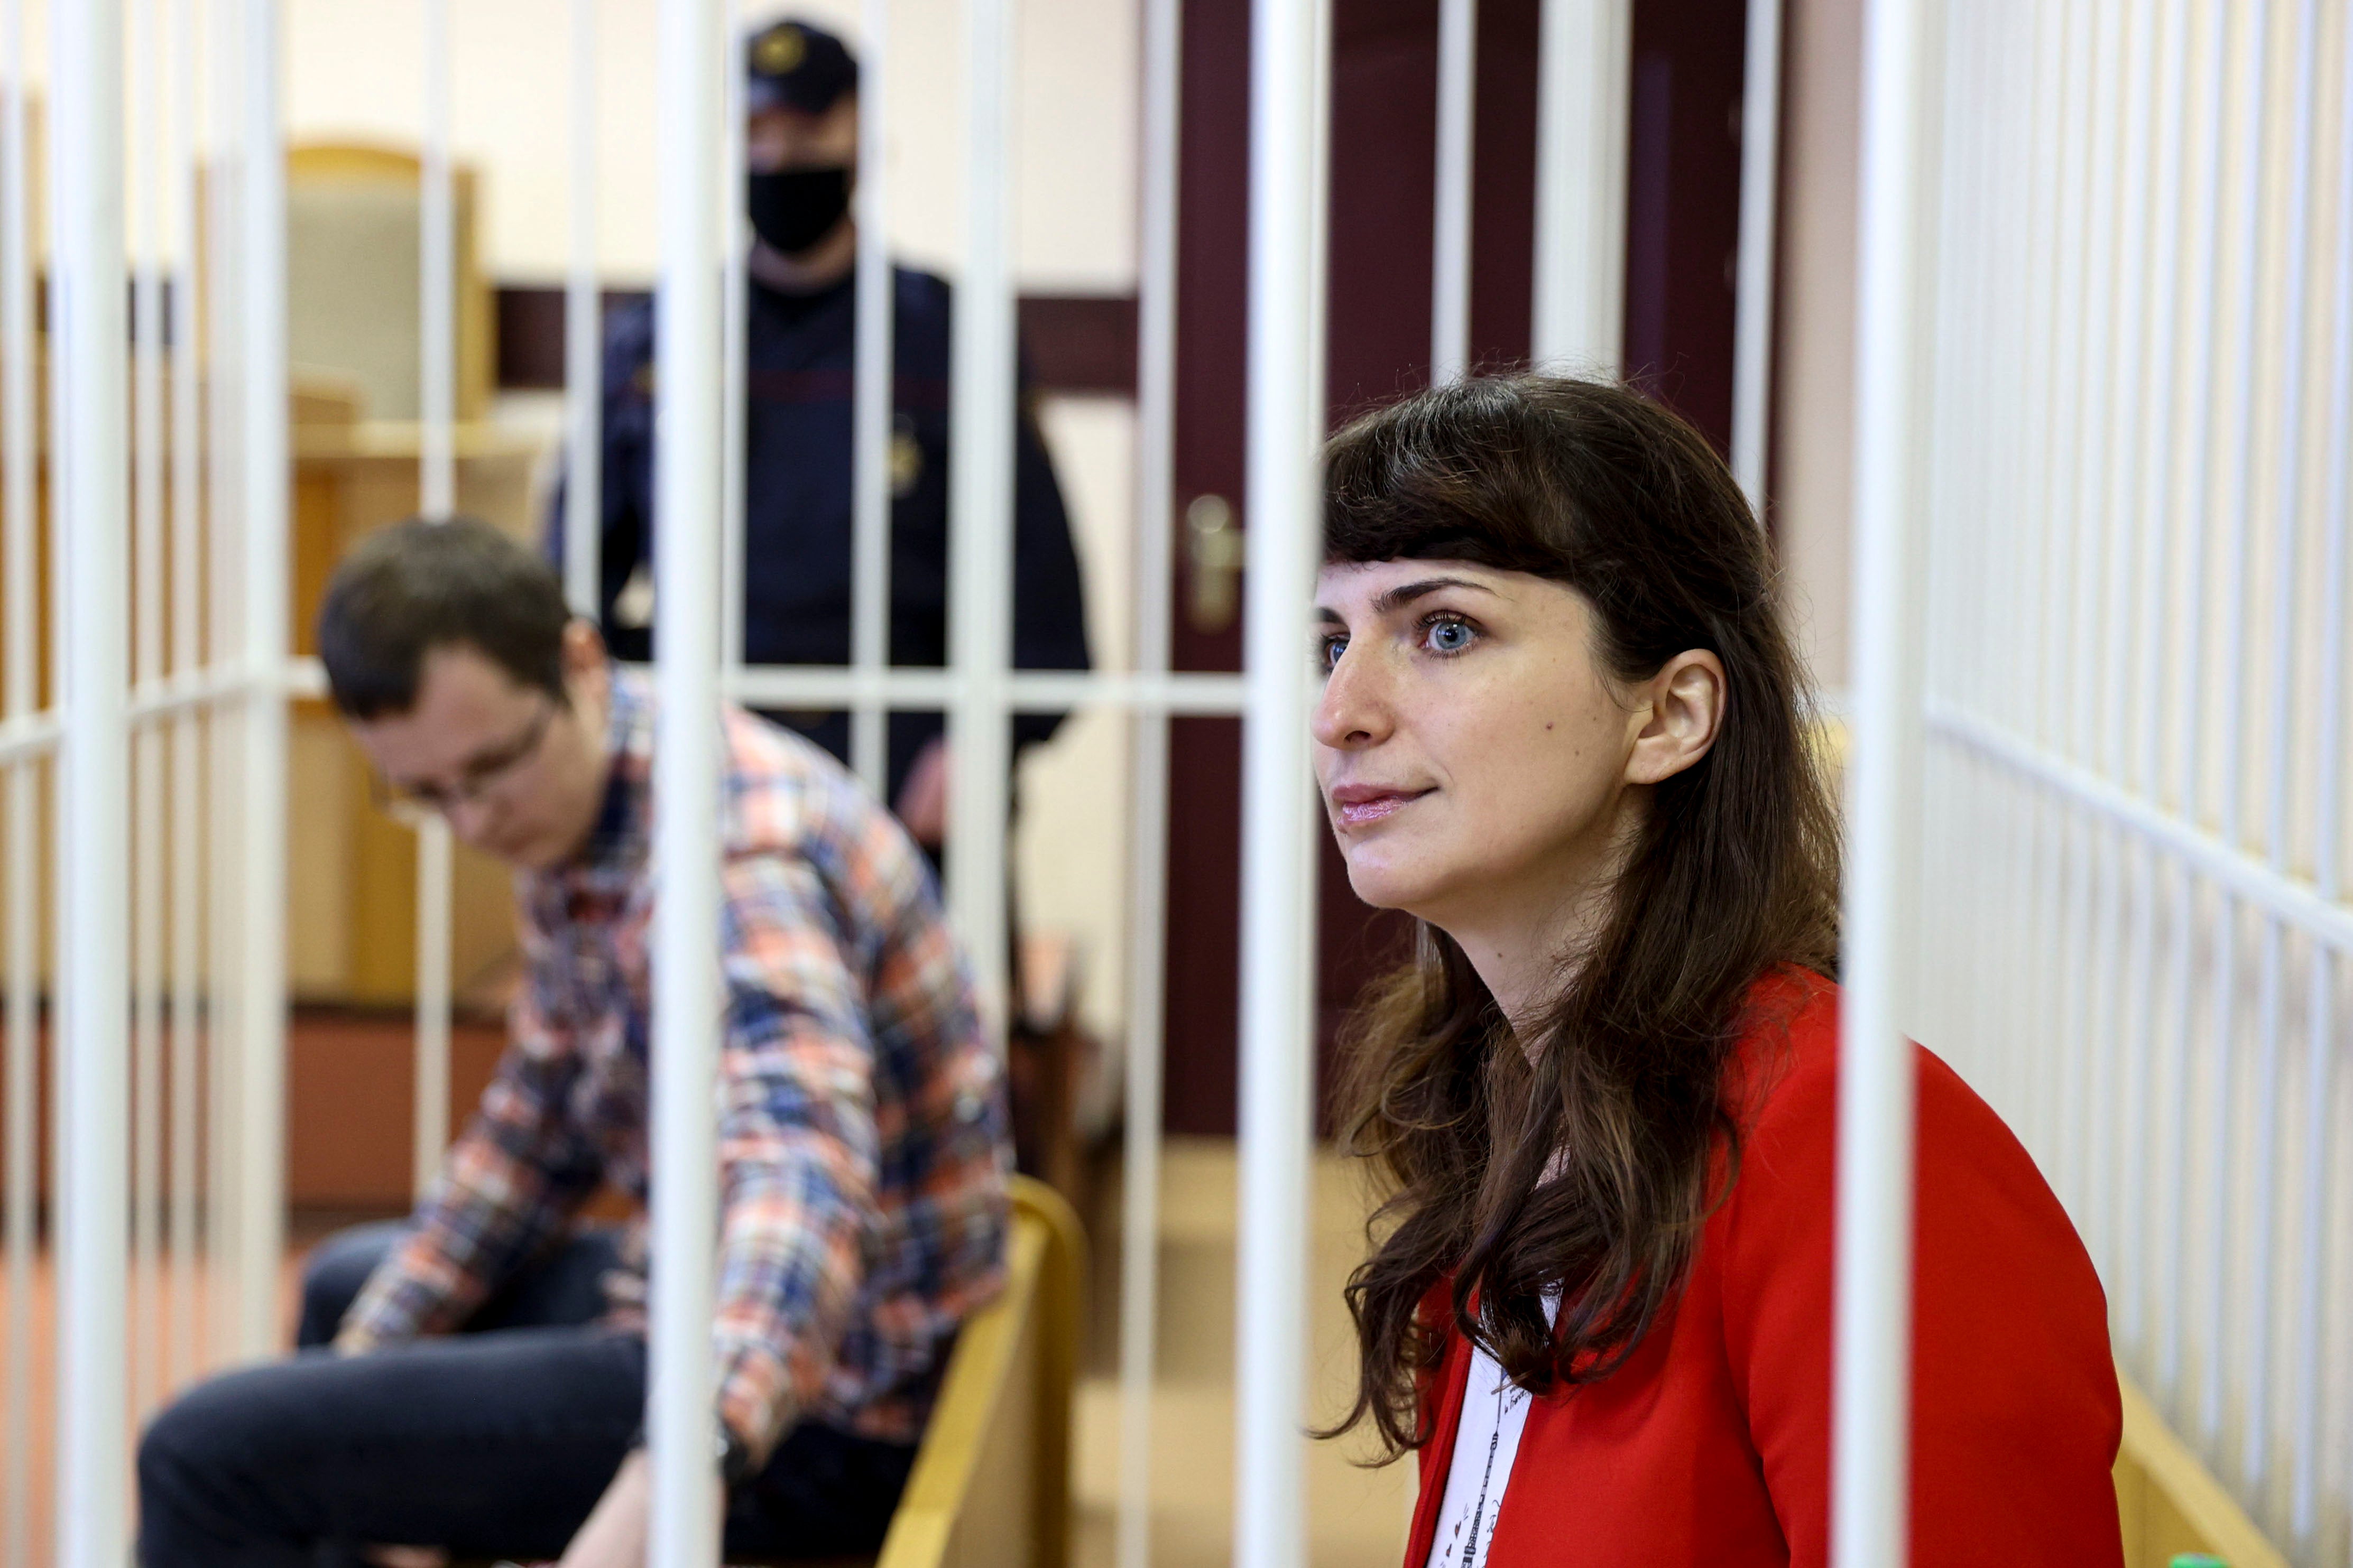 Журналистка Катерина Борисевич (справа) и доктор Артём Сорокин на судебном заседании в Минске 19 февраля 2021 года.